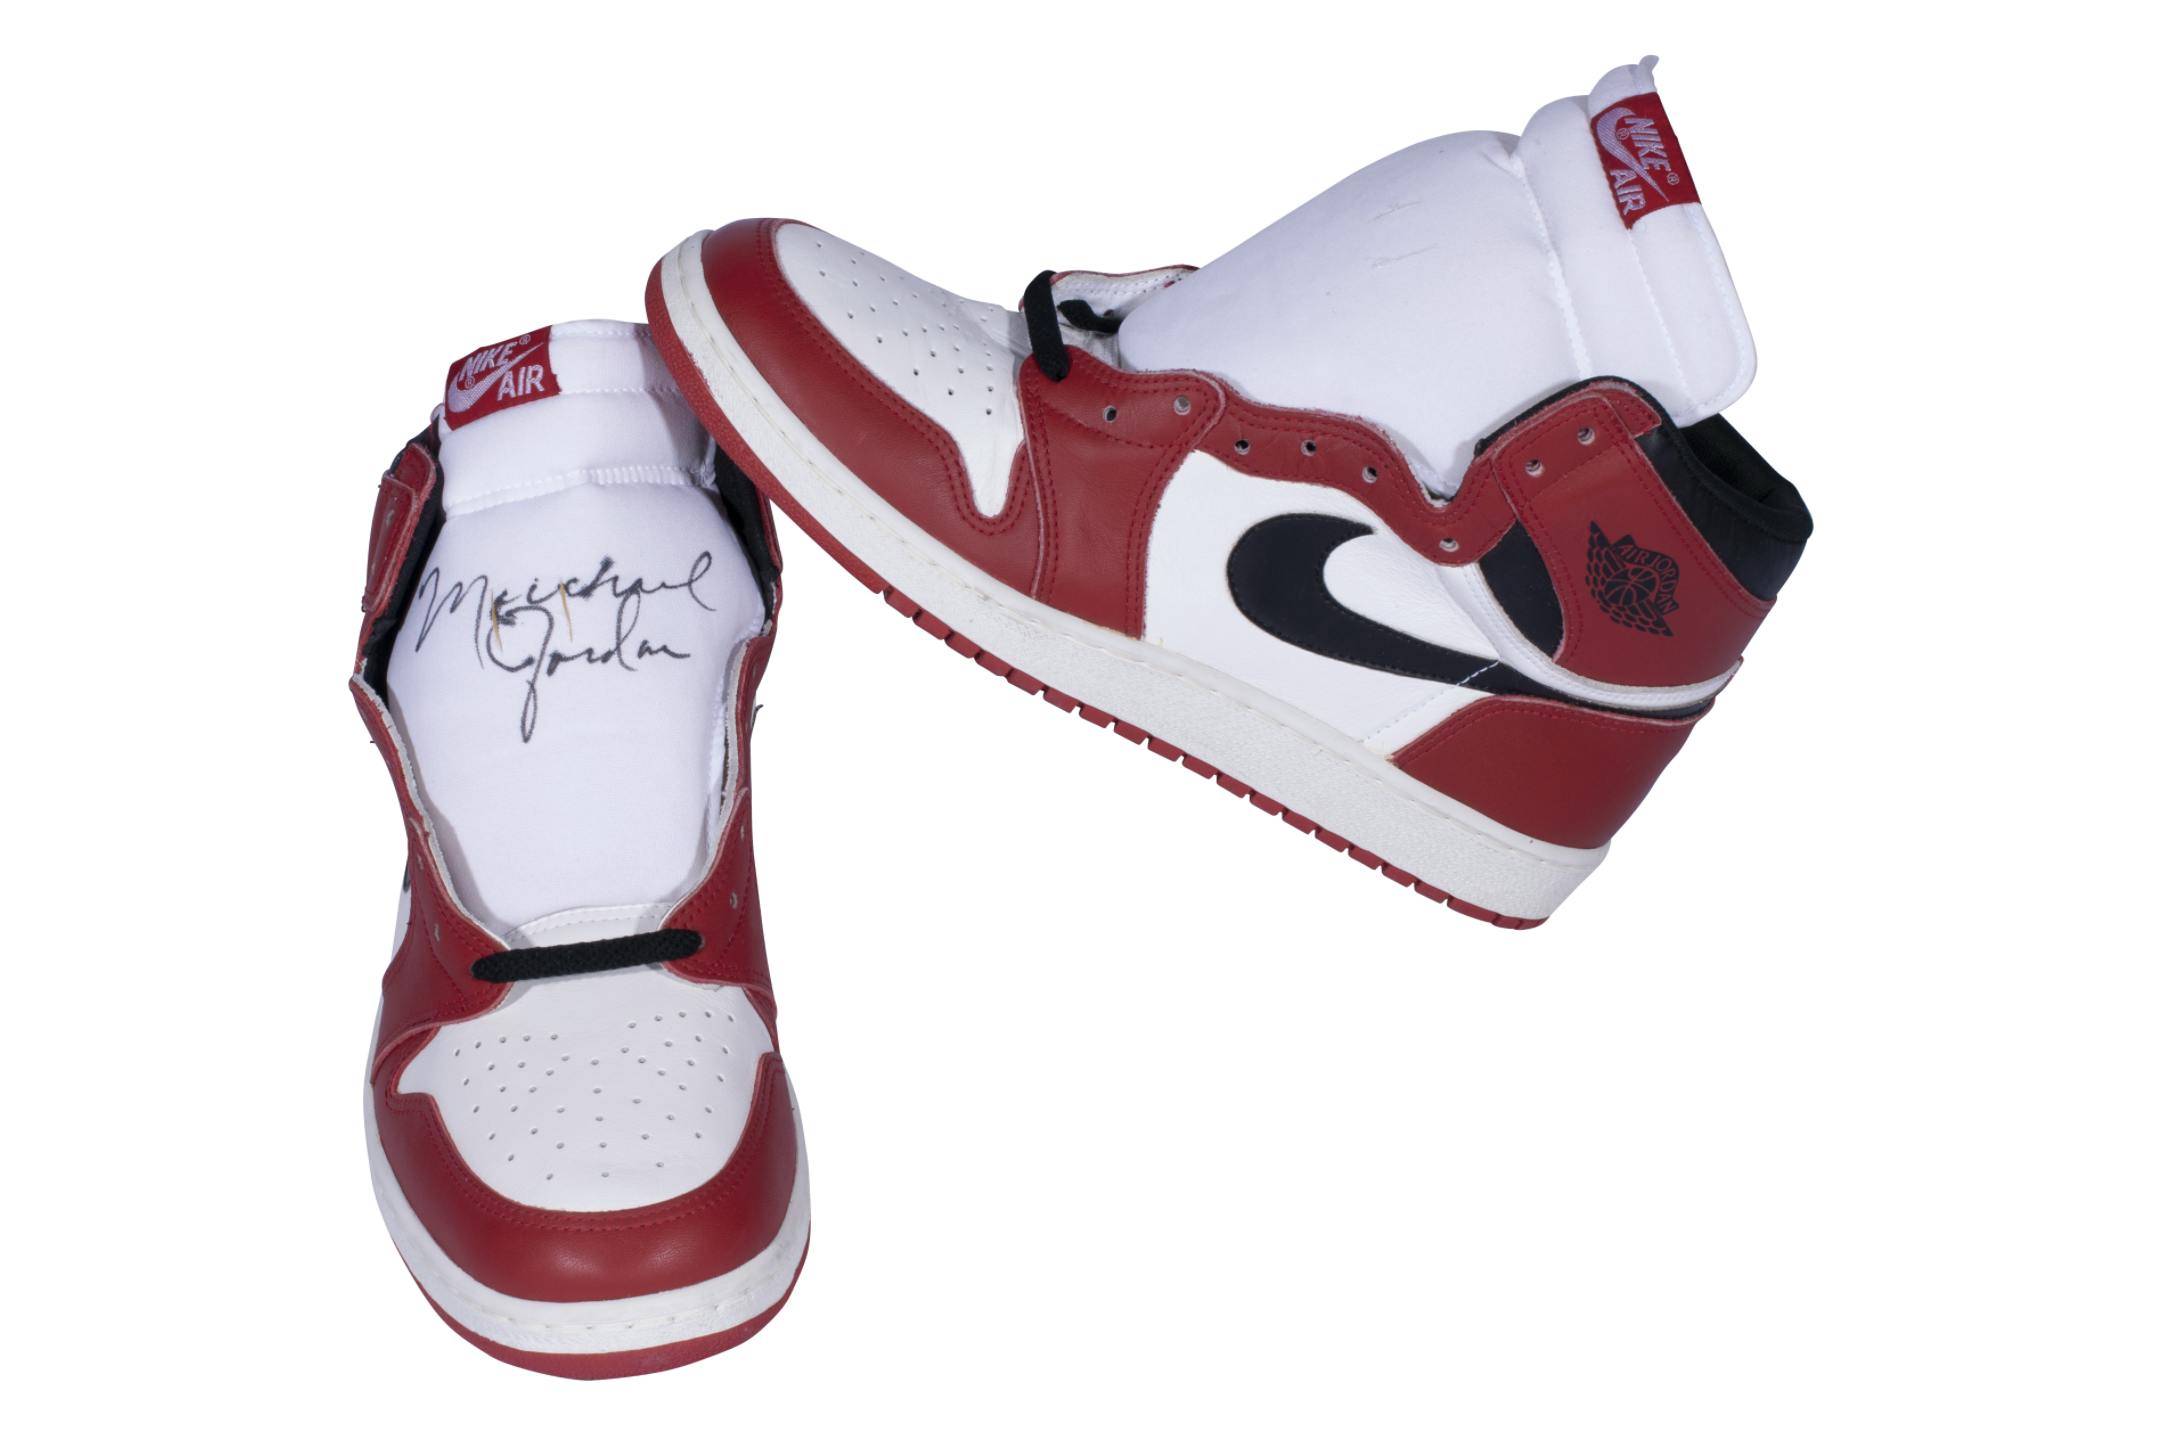 michael jordan shoes